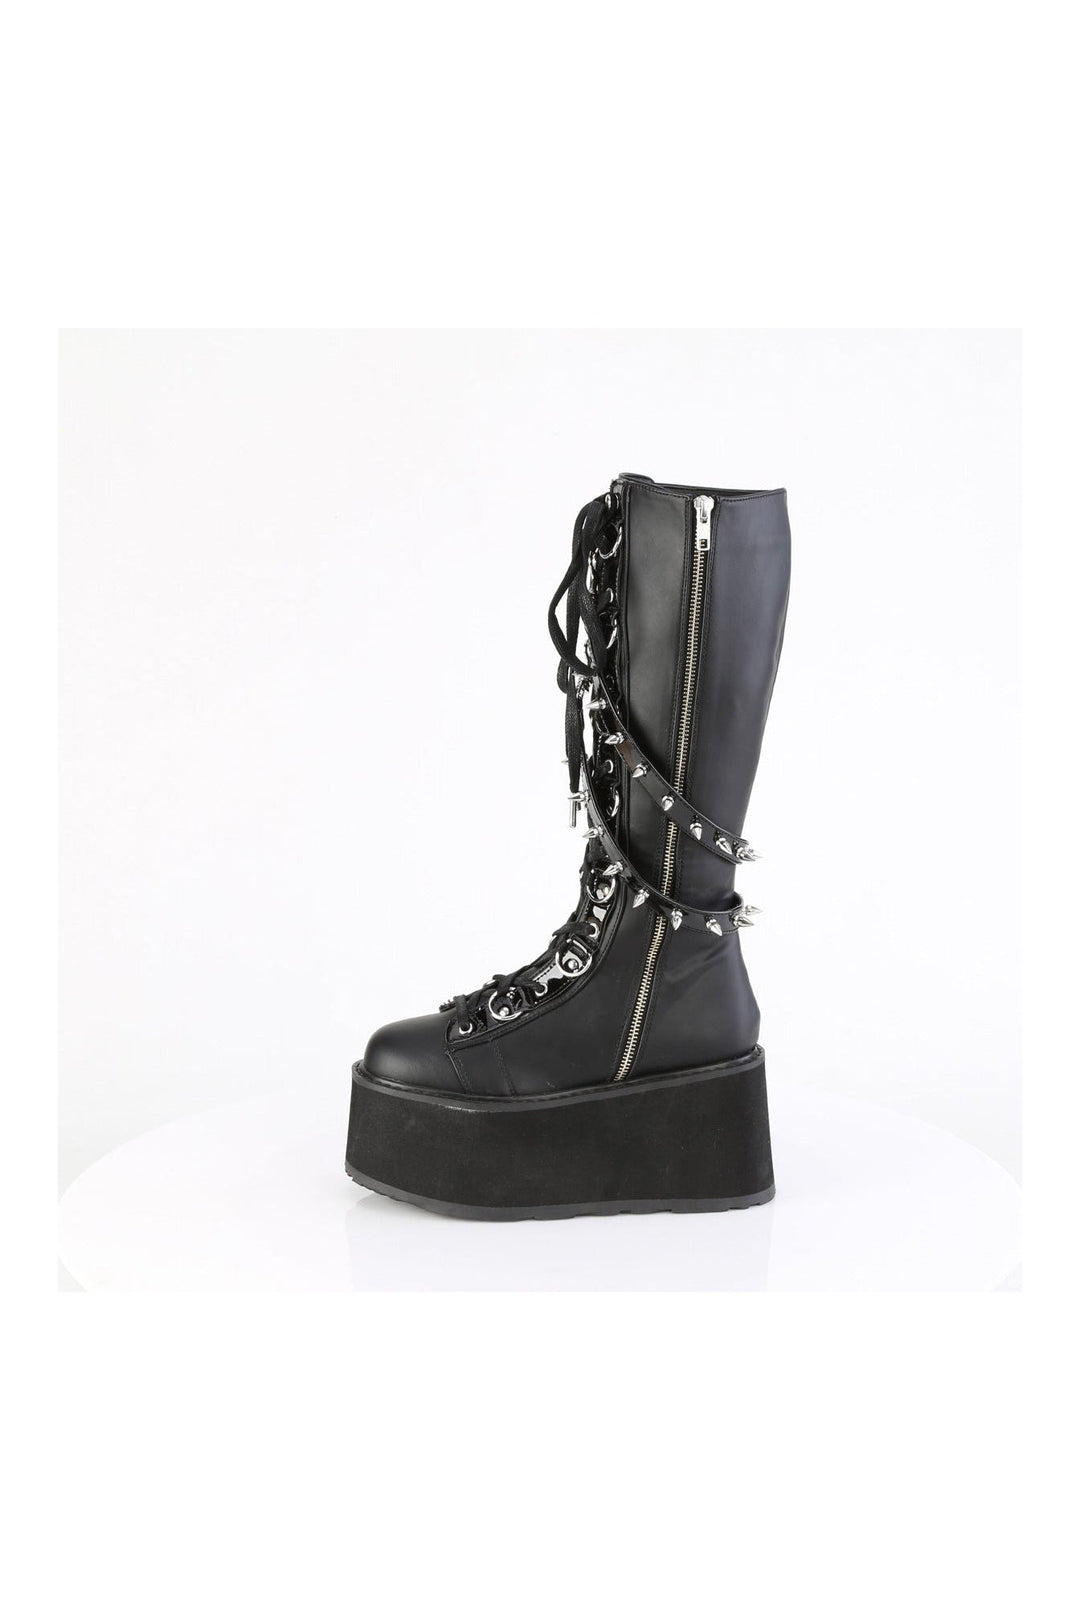 DAMNED-220 Black Vegan Leather Knee Boot